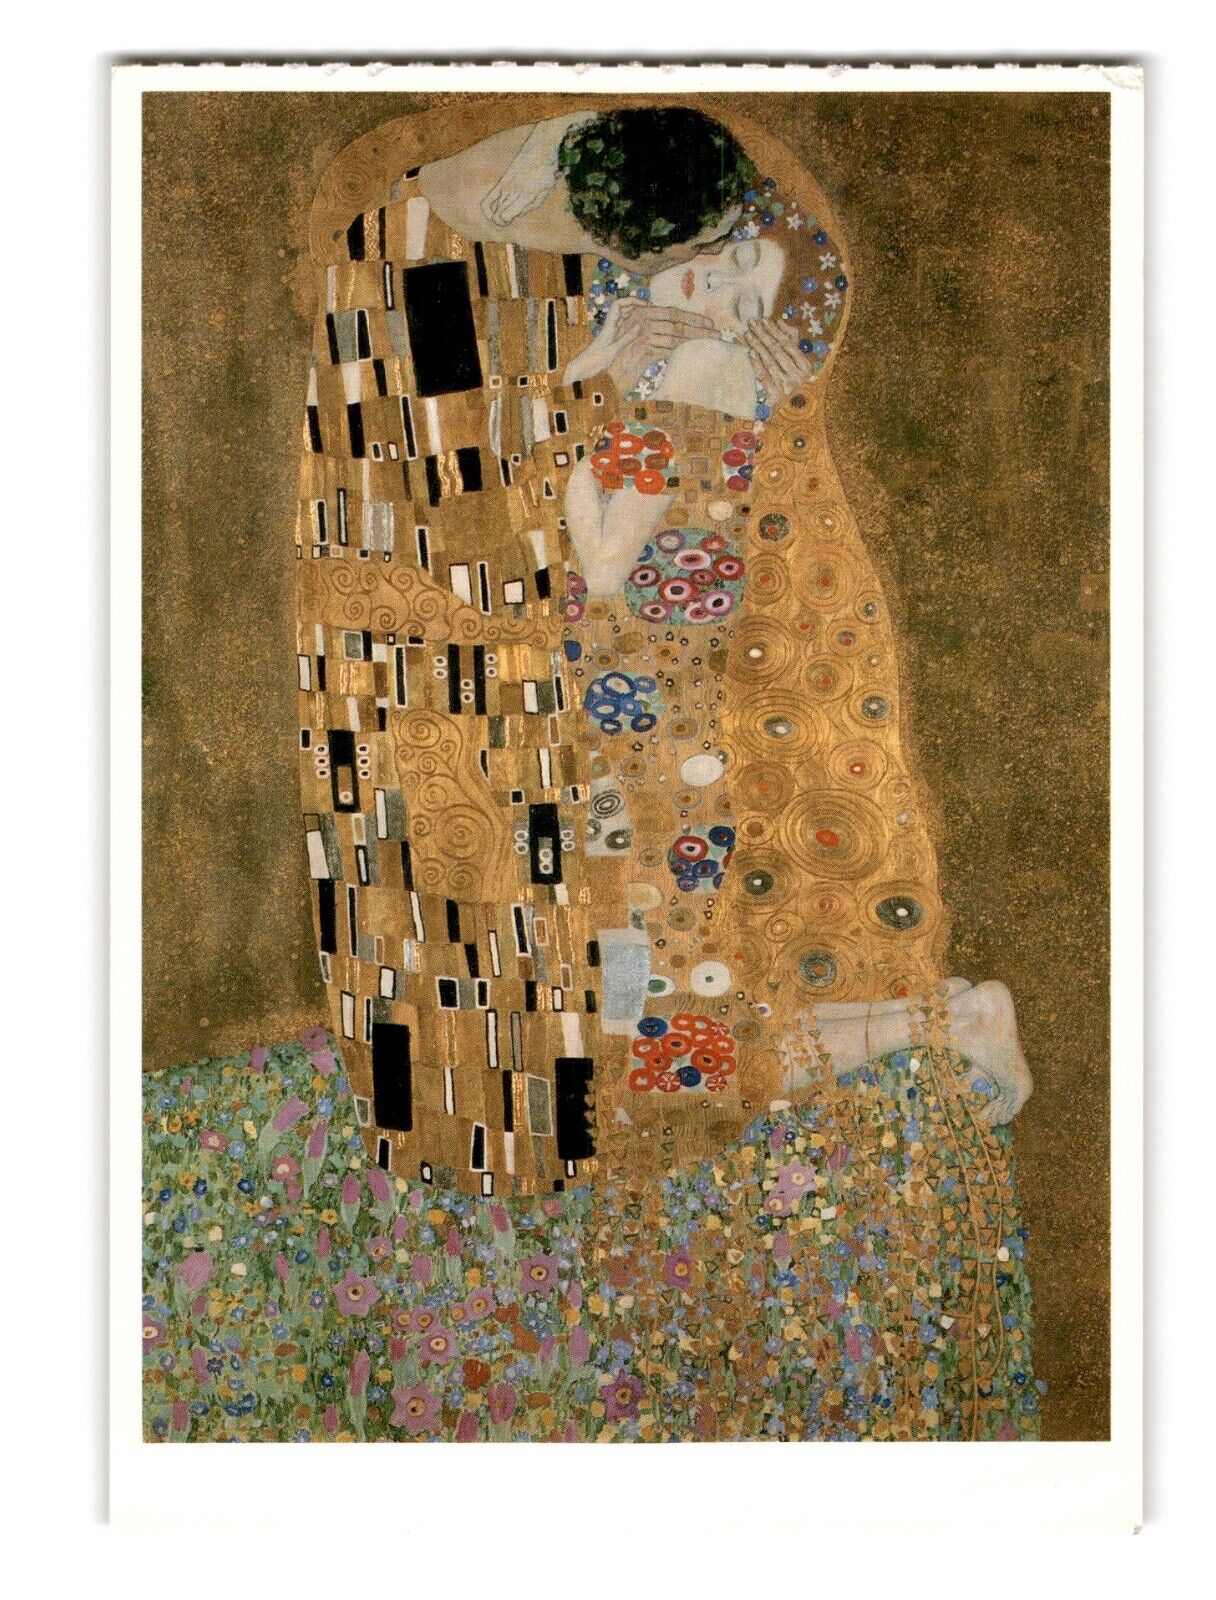 The Kiss, 1907-1908 Gustav Klimt Vintage Chrome Postcard